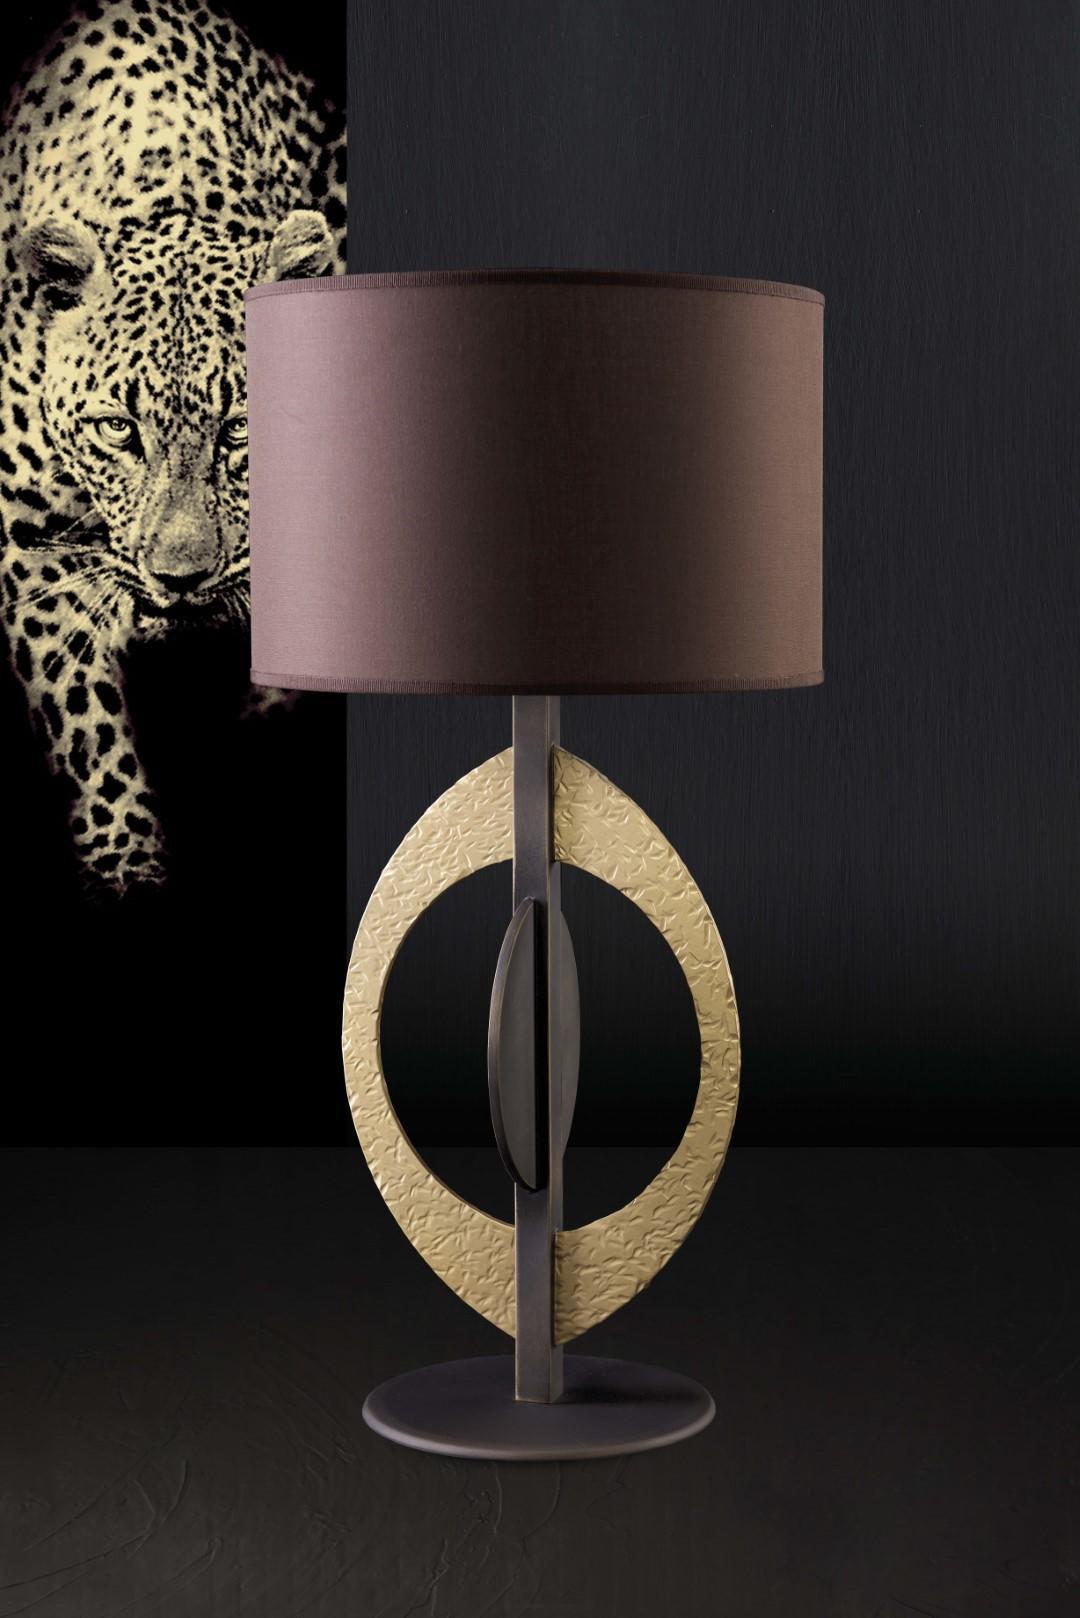 Palermo lamp